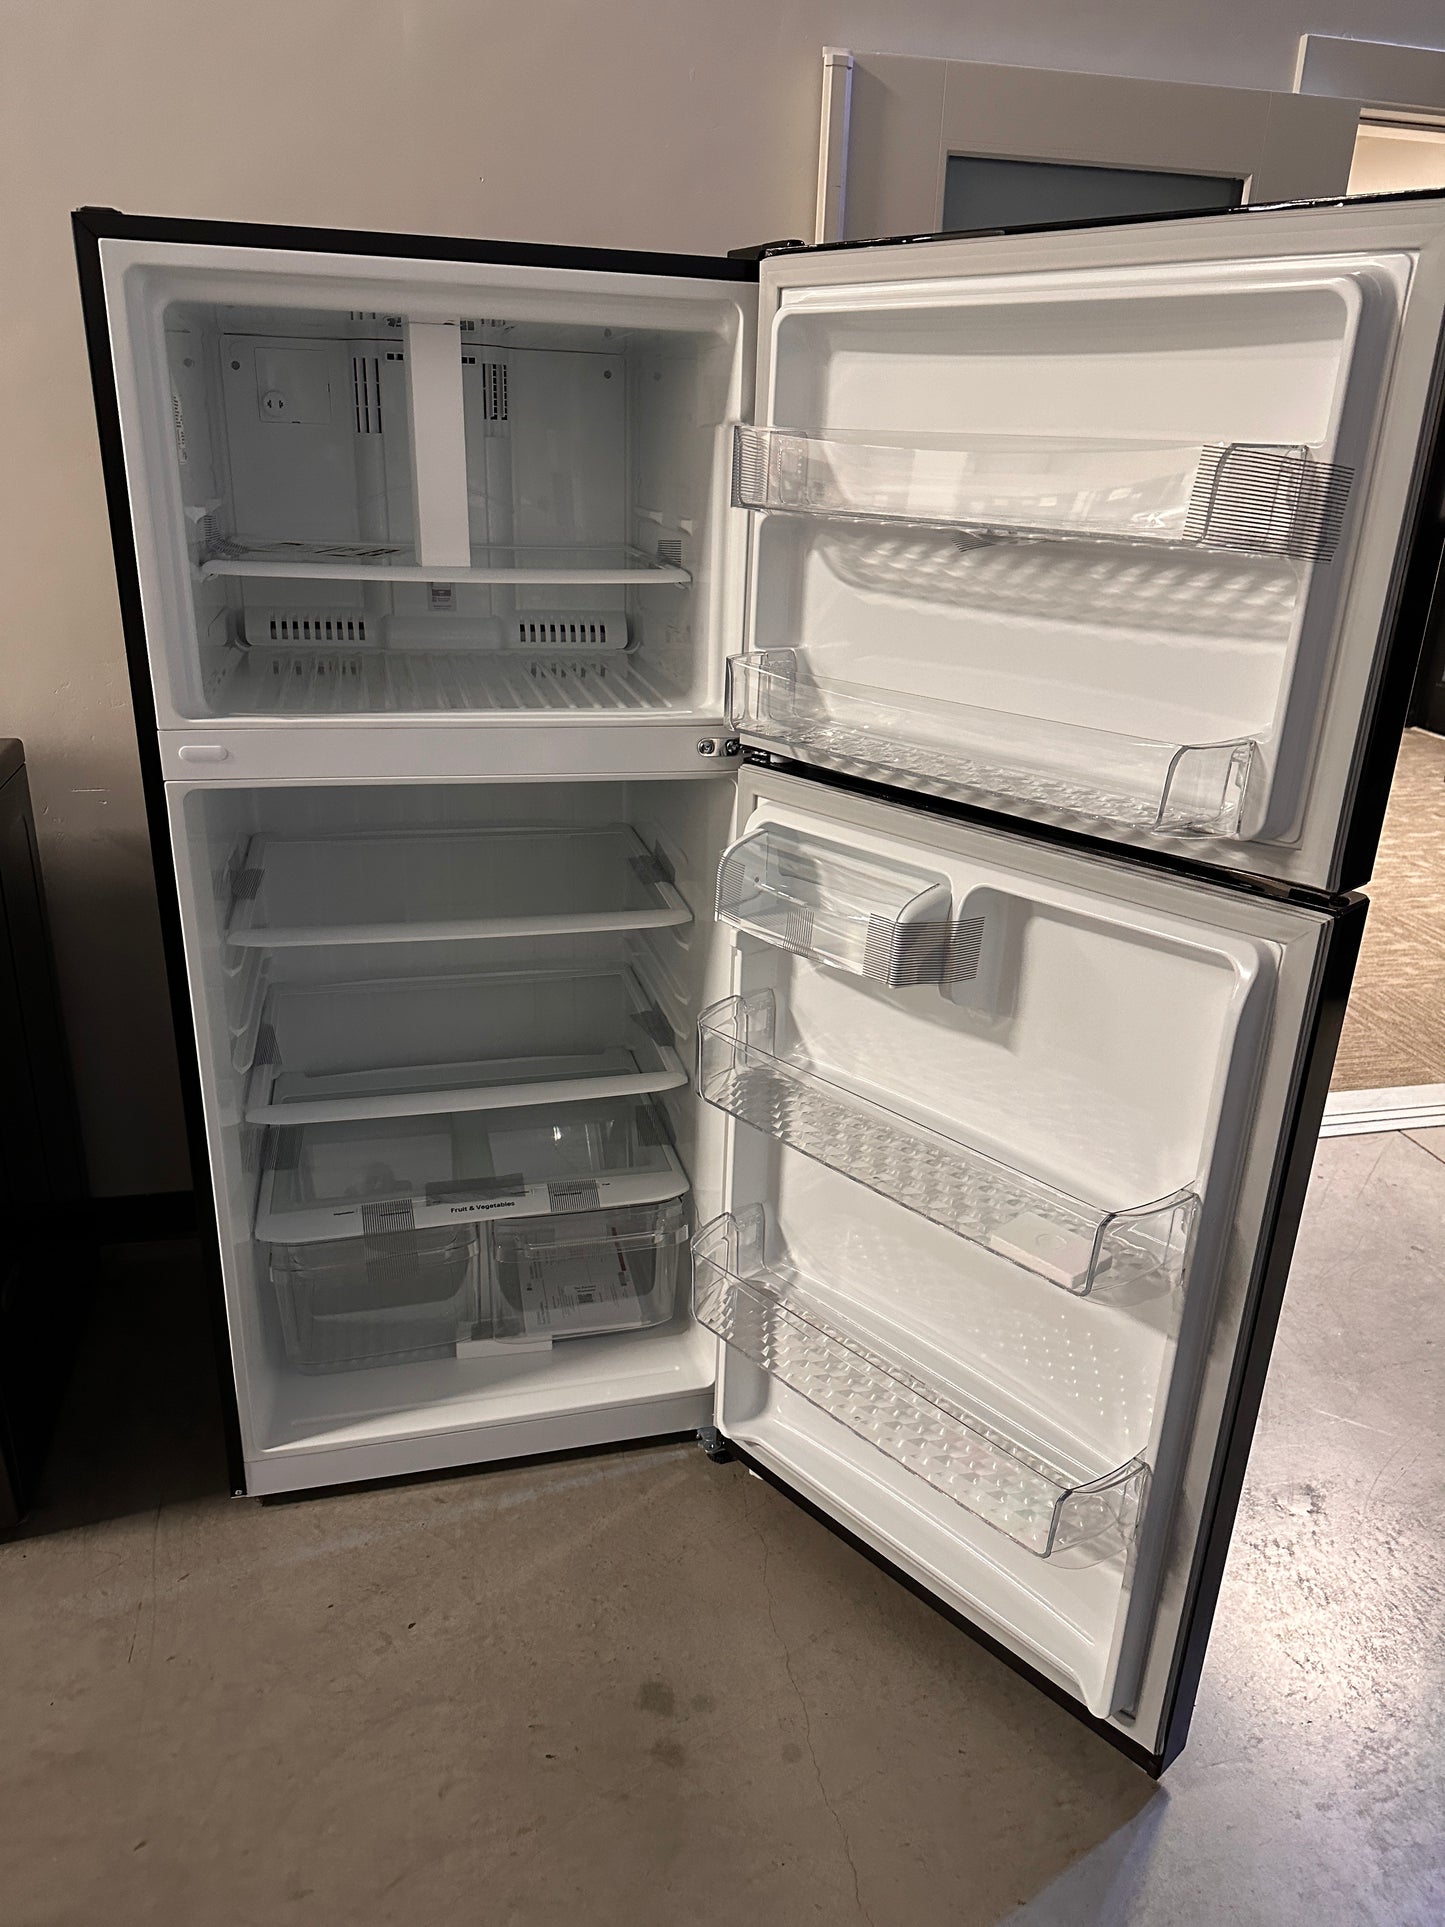 New LG - 20.2 Cu. Ft. Top-Freezer Refrigerator - Black  MODEL: LTCS20020B  REF13128